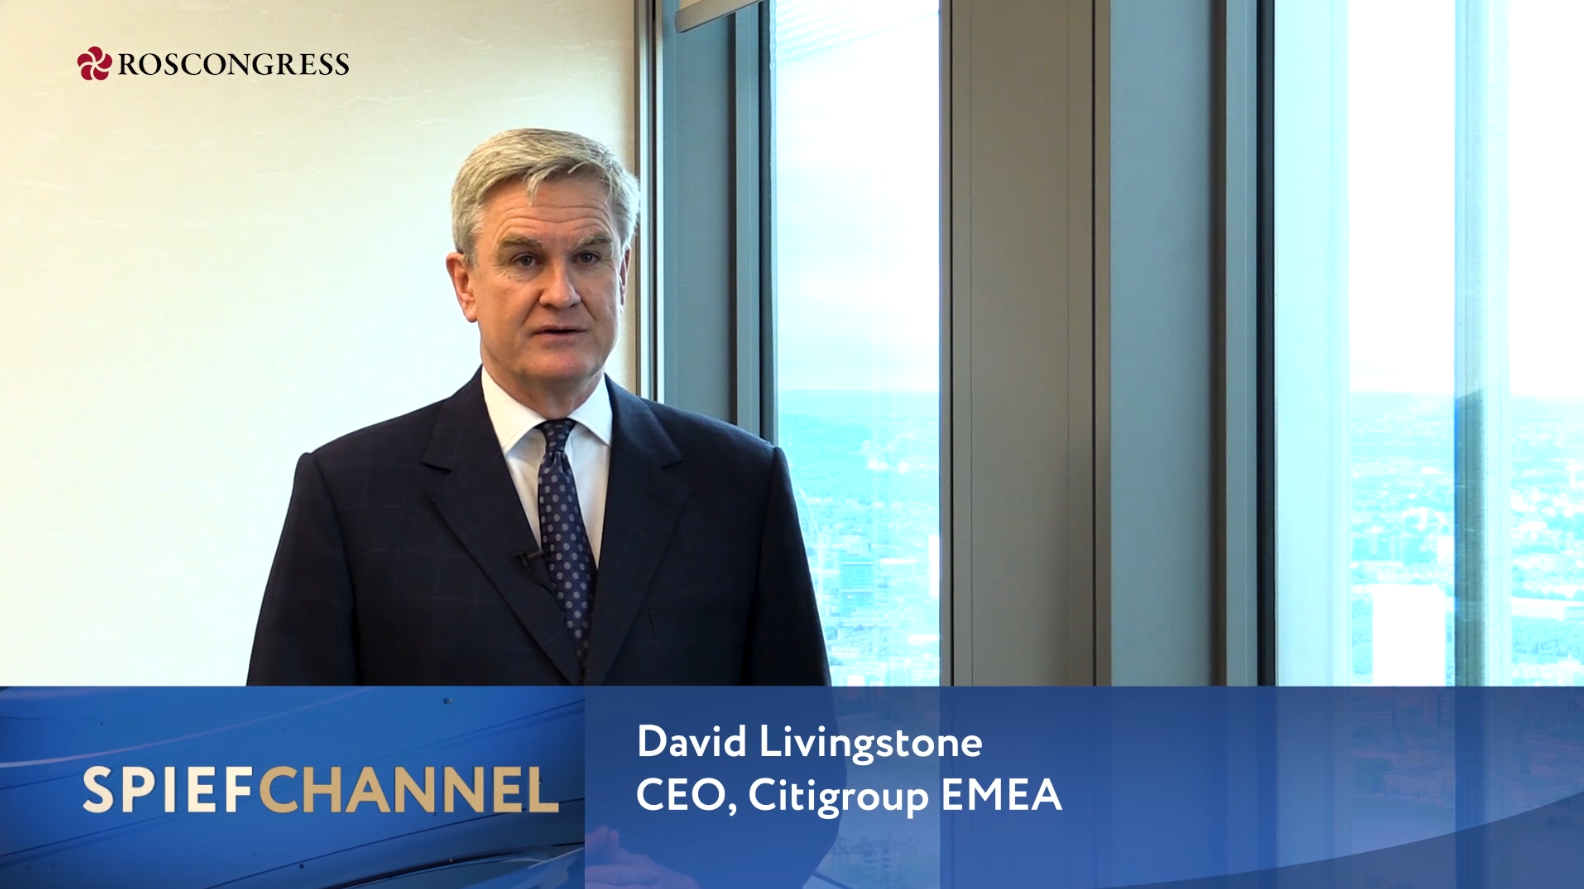 David Livingstone, CEO, Citigroup EMEA